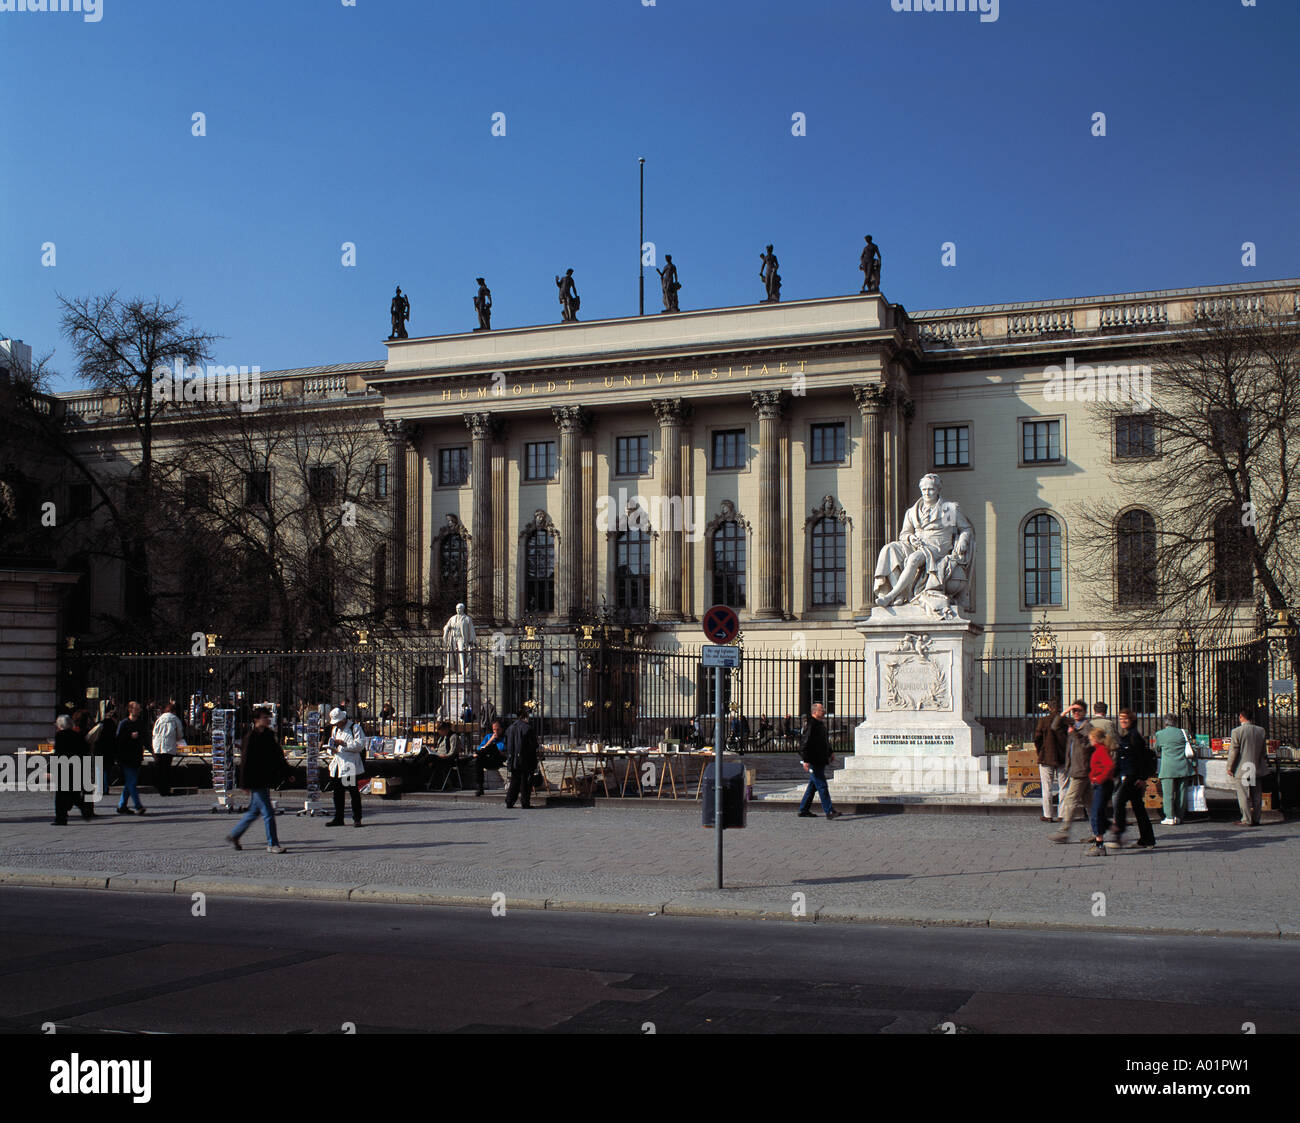 Unter den Linden, Humboldt-Universitaet, Marmordenkmal von Alexander von Humboldt, statue, Berlin Banque D'Images